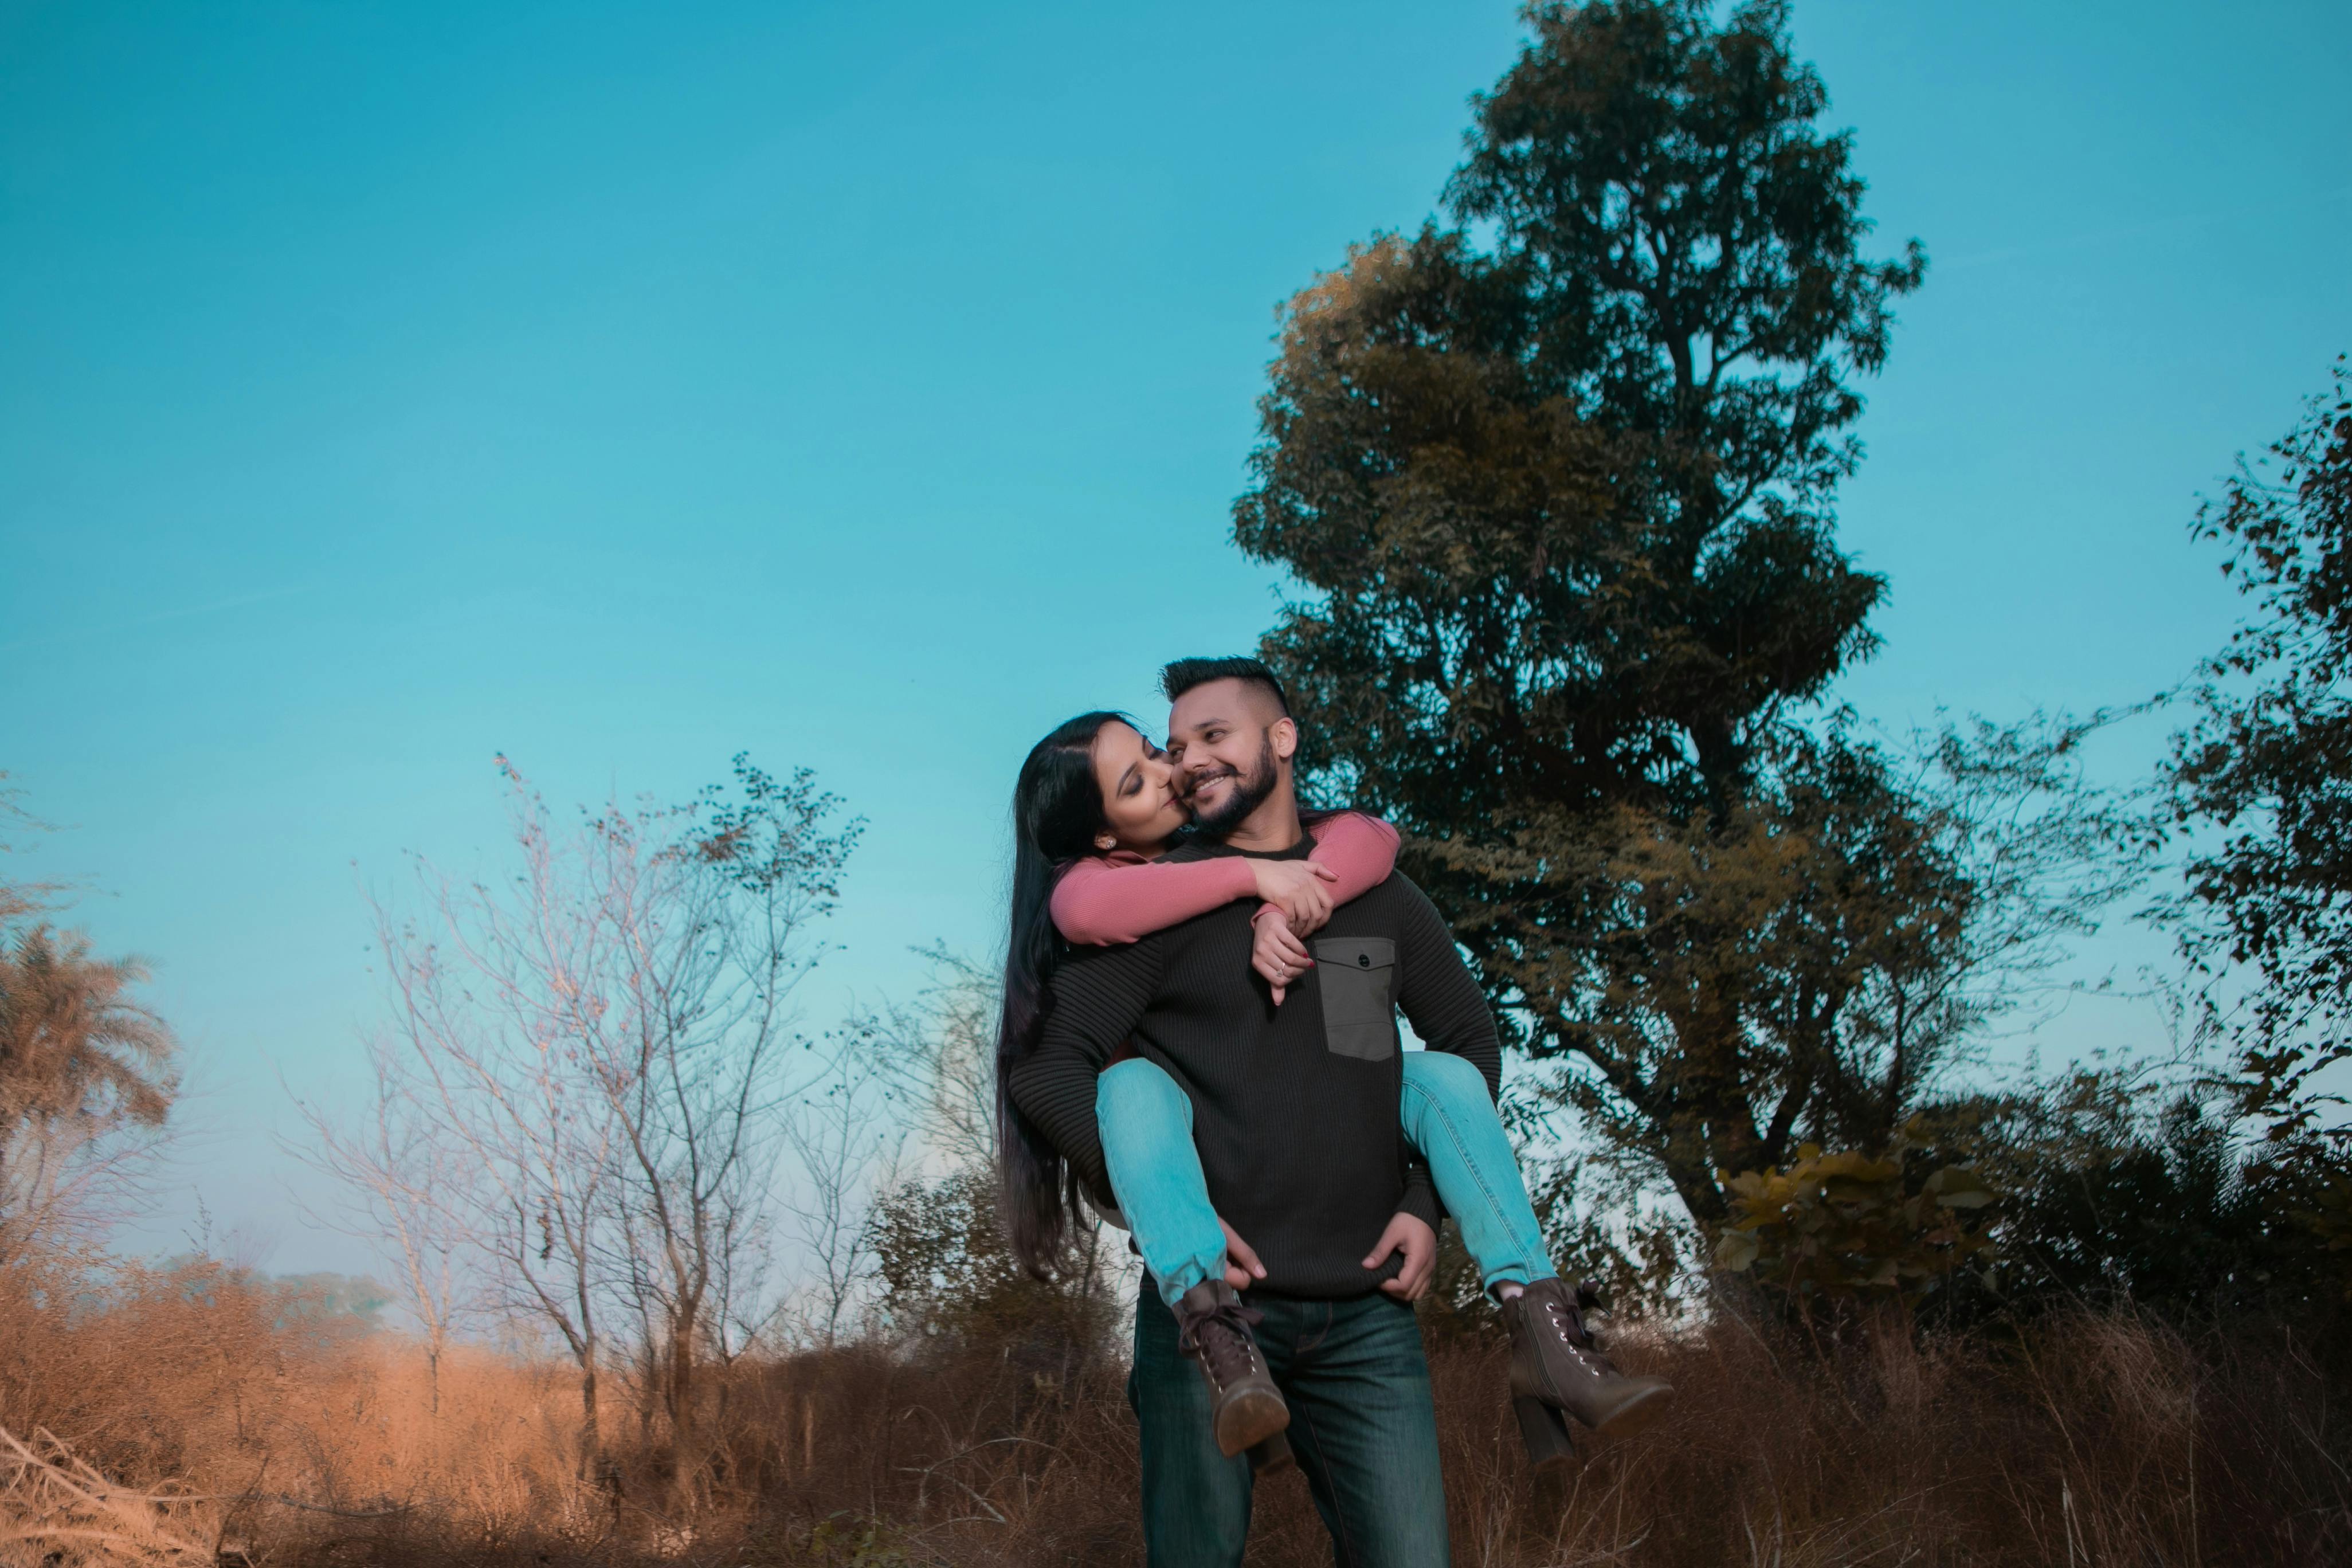 Free stock photo of #couple #Love #hug #romantic #canada #Punjab